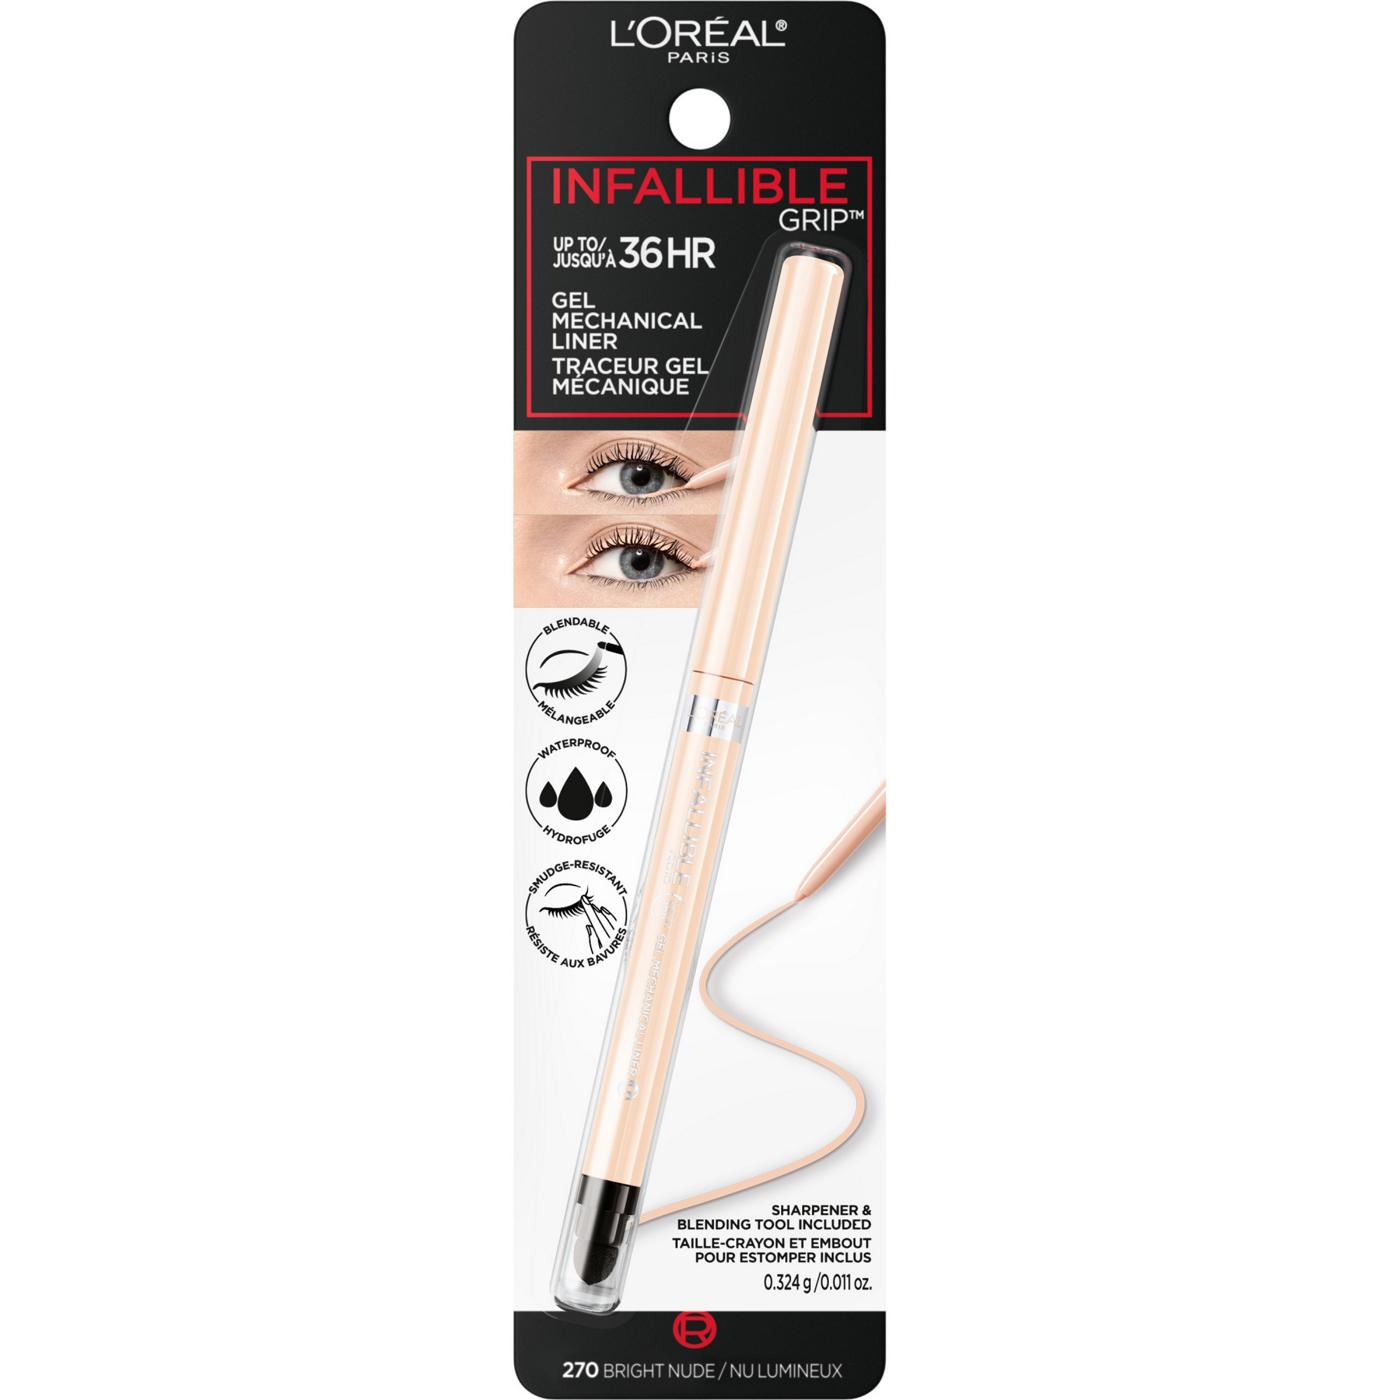 L'Oréal Paris Infallible Grip Mechanical Gel Makeup Eyeliner Bright Nude; image 1 of 5